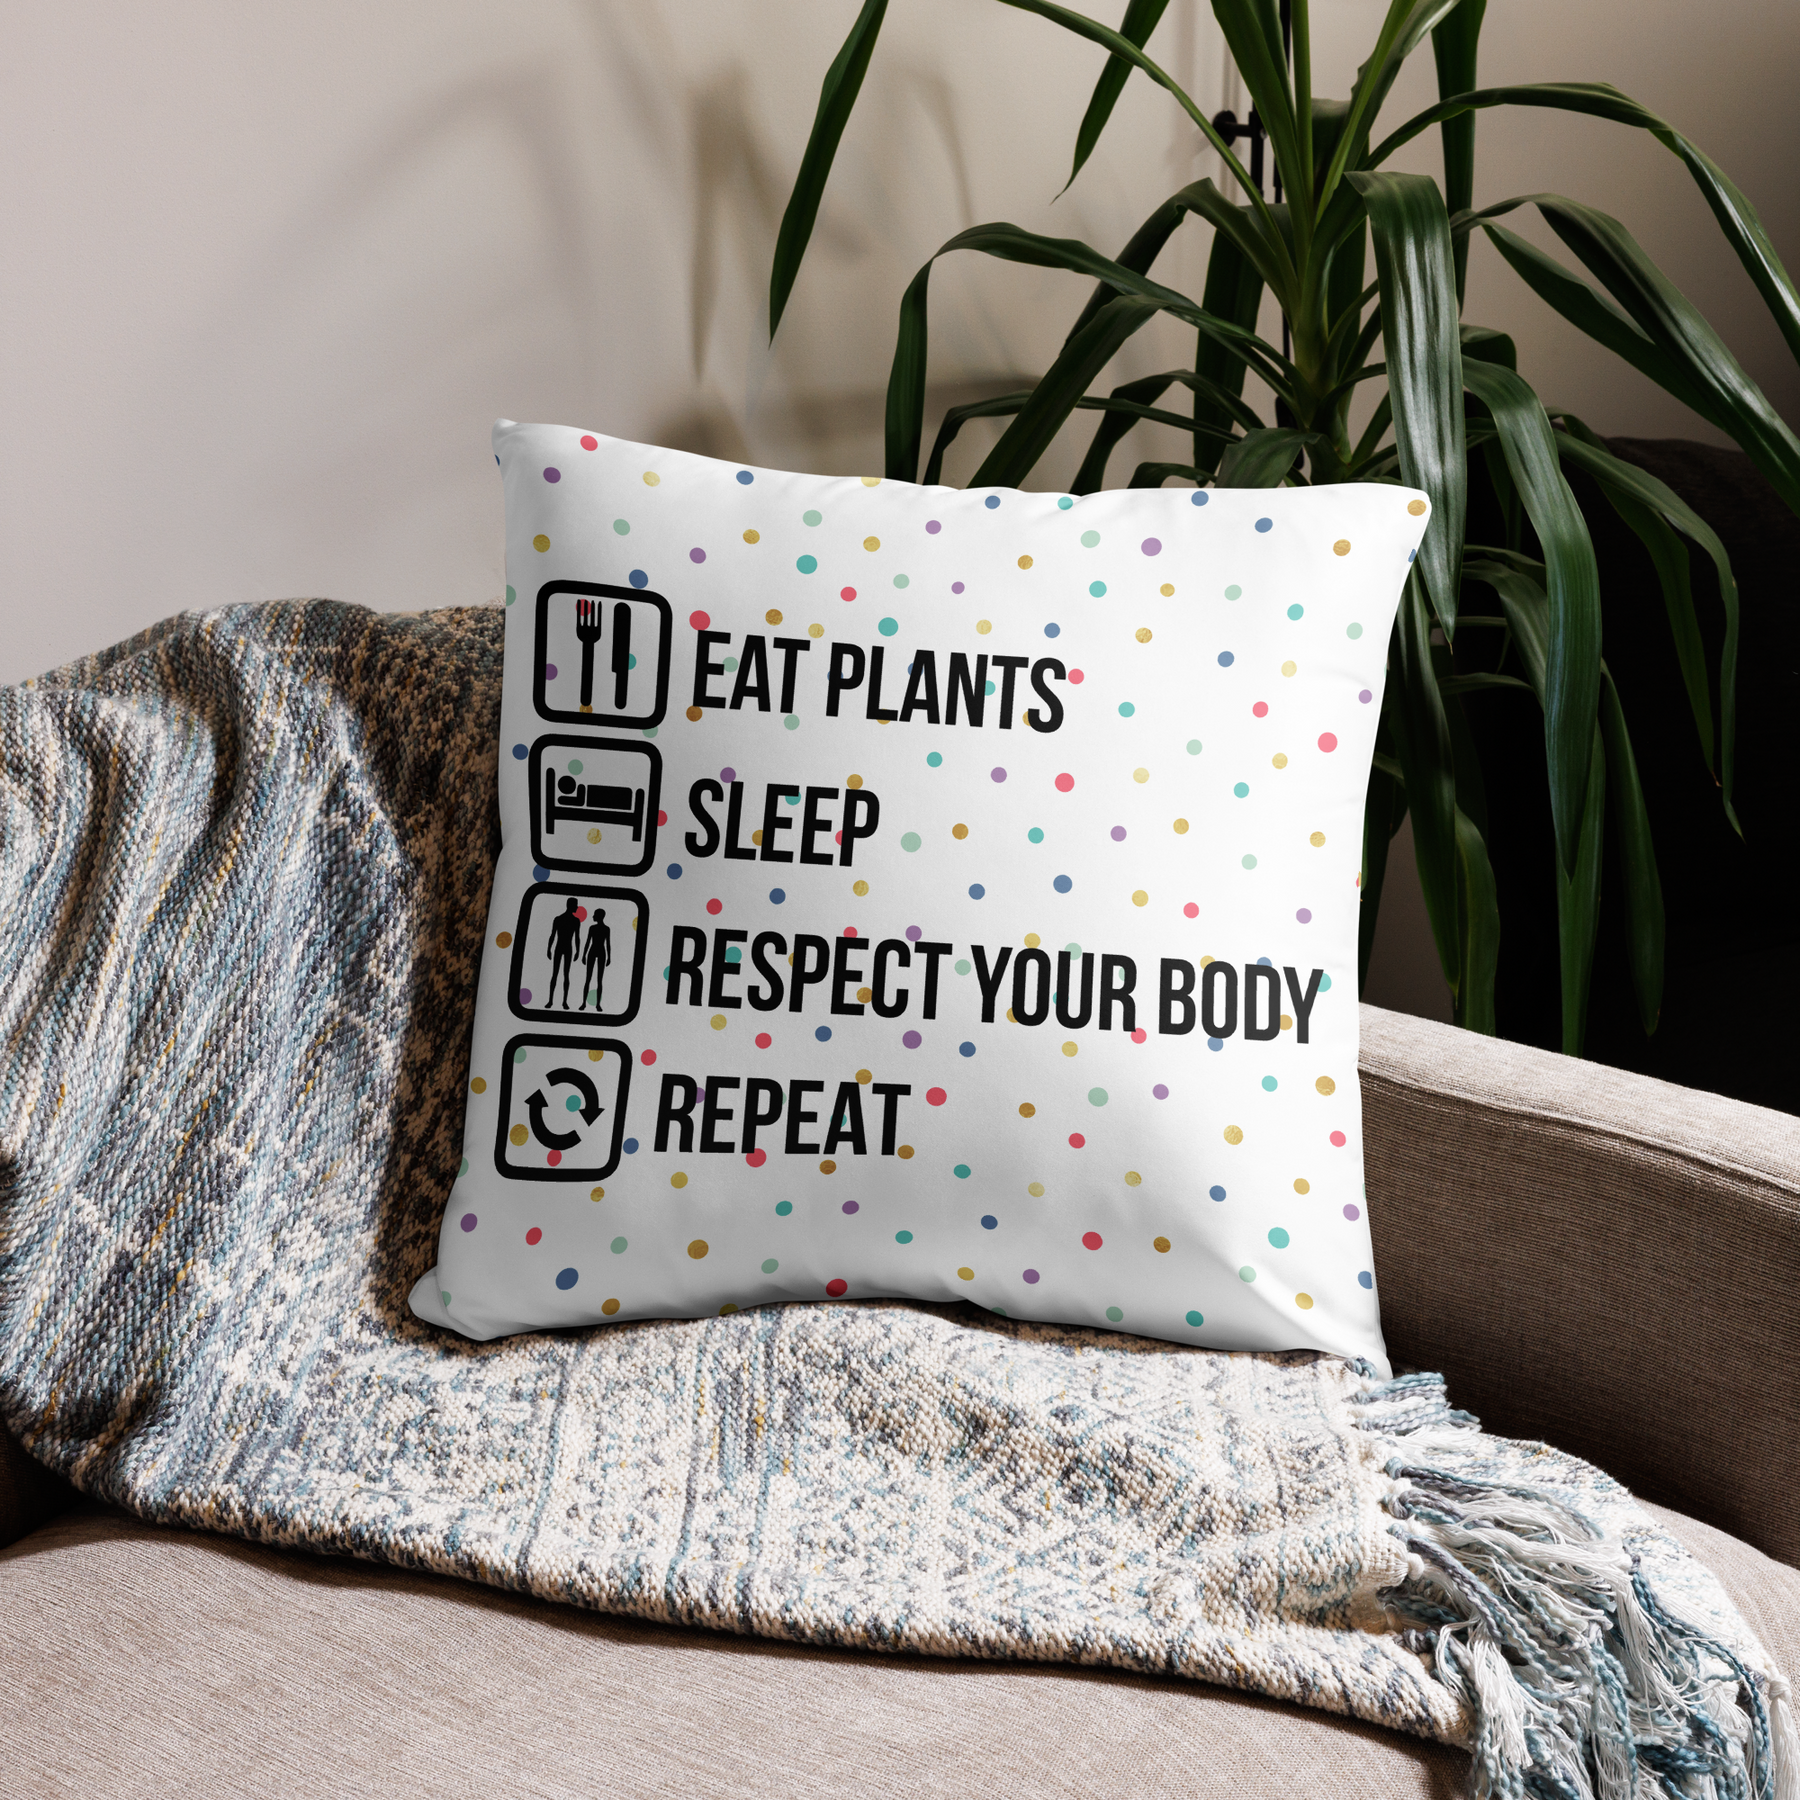 EAT PLANTS RESPECT BODY REPEAT Cushion